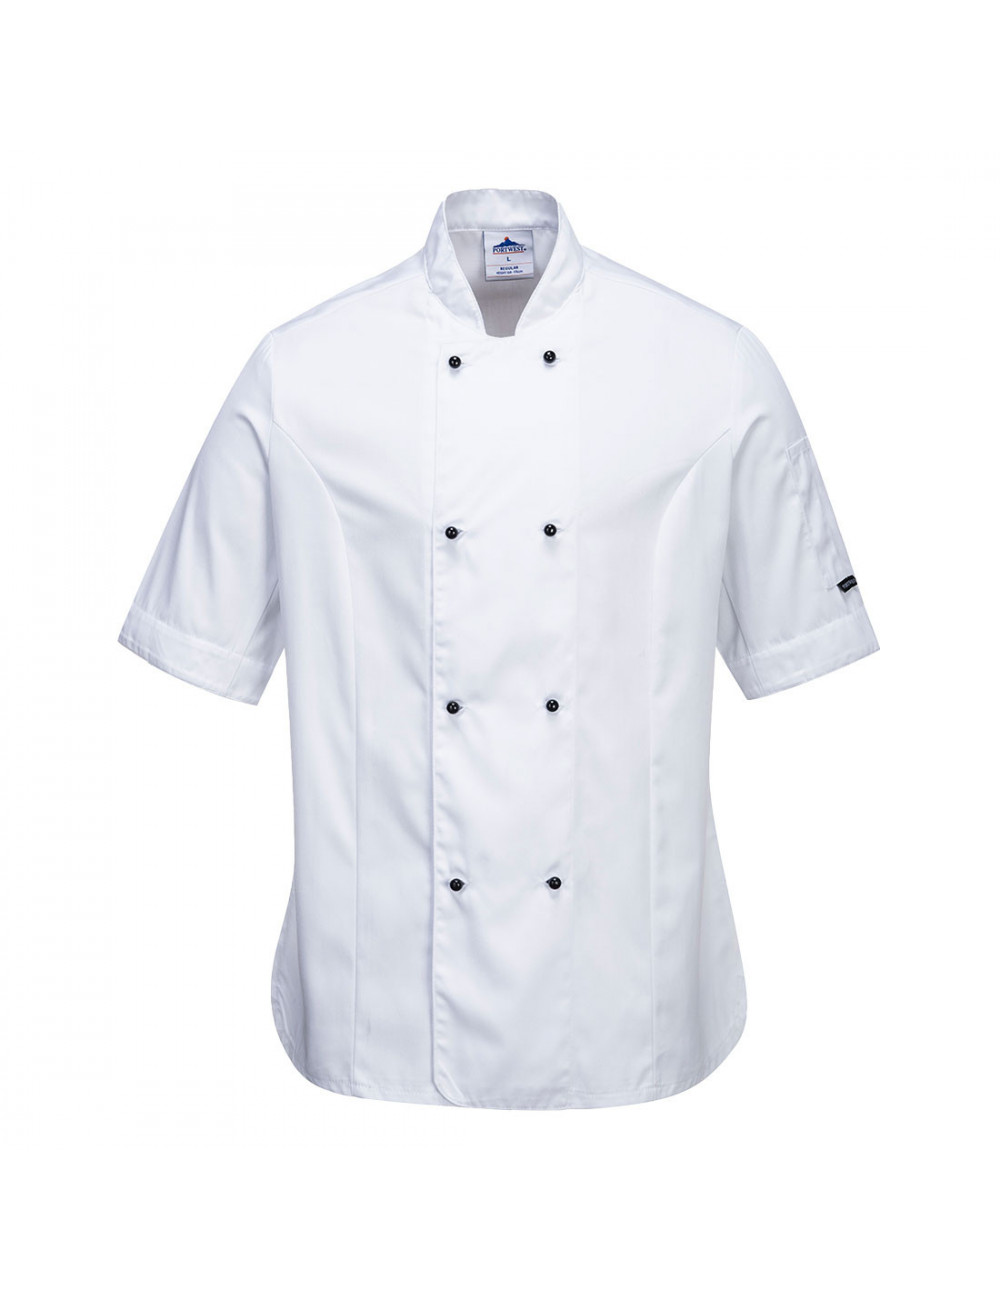 Rachel short sleeve chef sweatshirt white Portwest